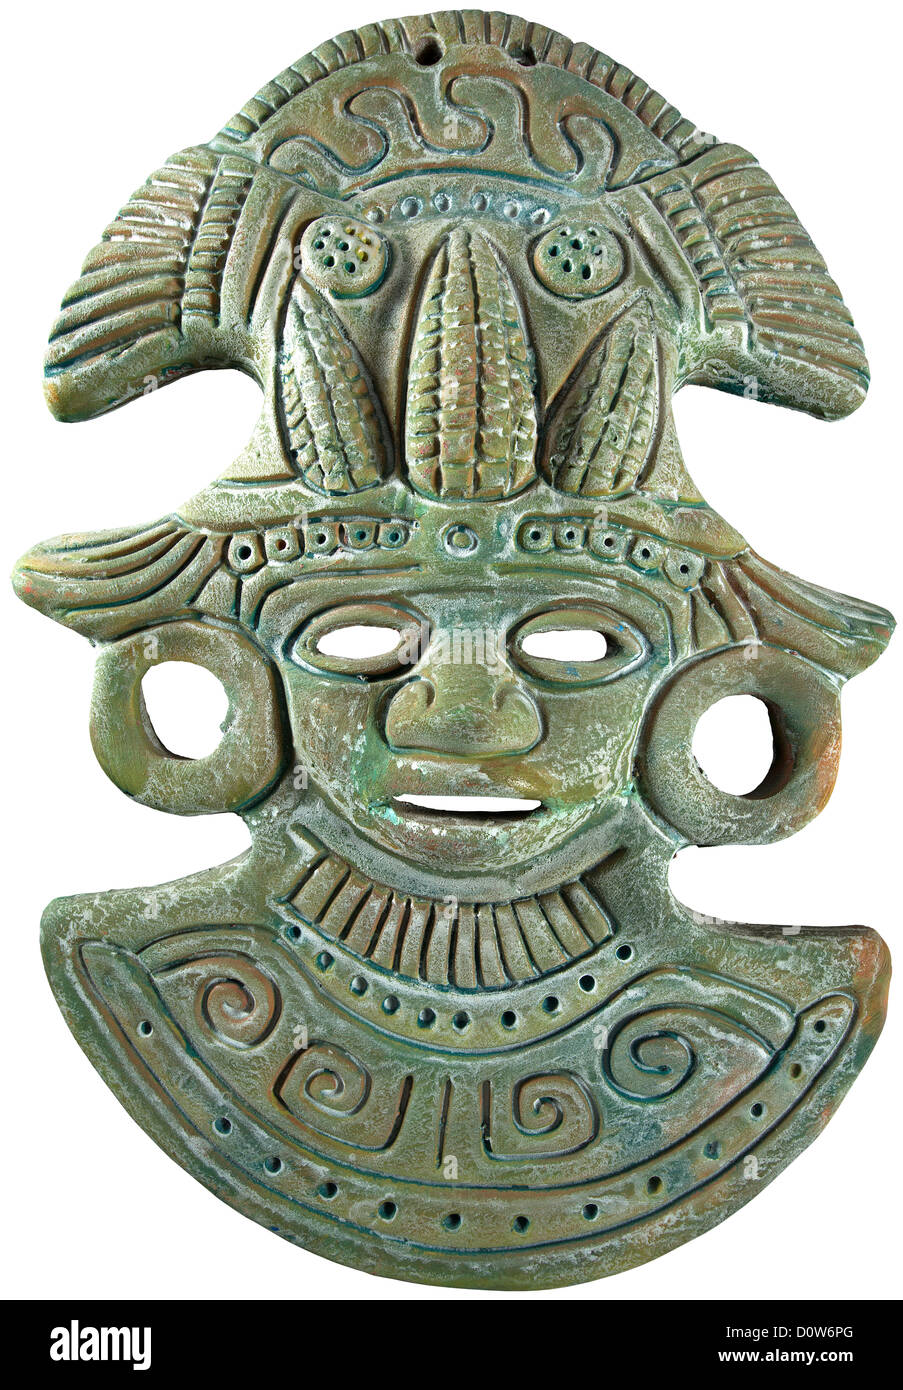 Aztec Mayan Maize God Mask - Mexico Stock Photo